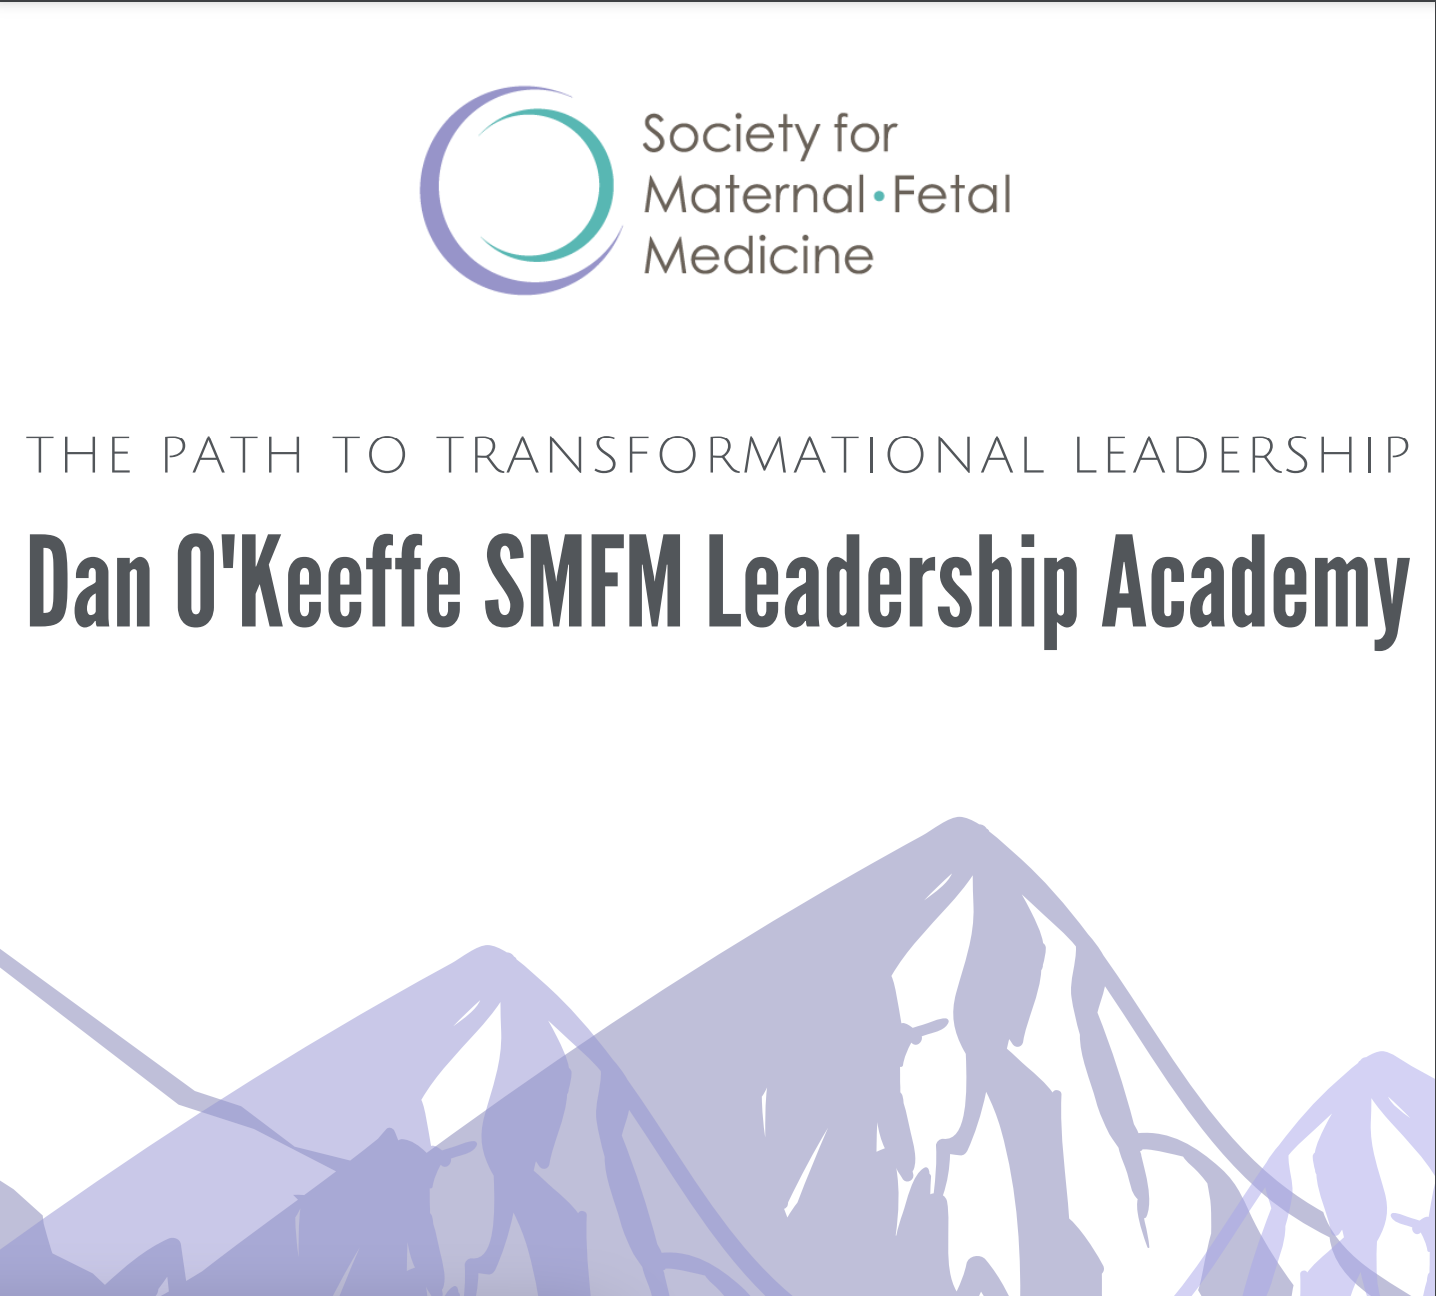 The Dan O'Keefe SMFM Leadership Academy